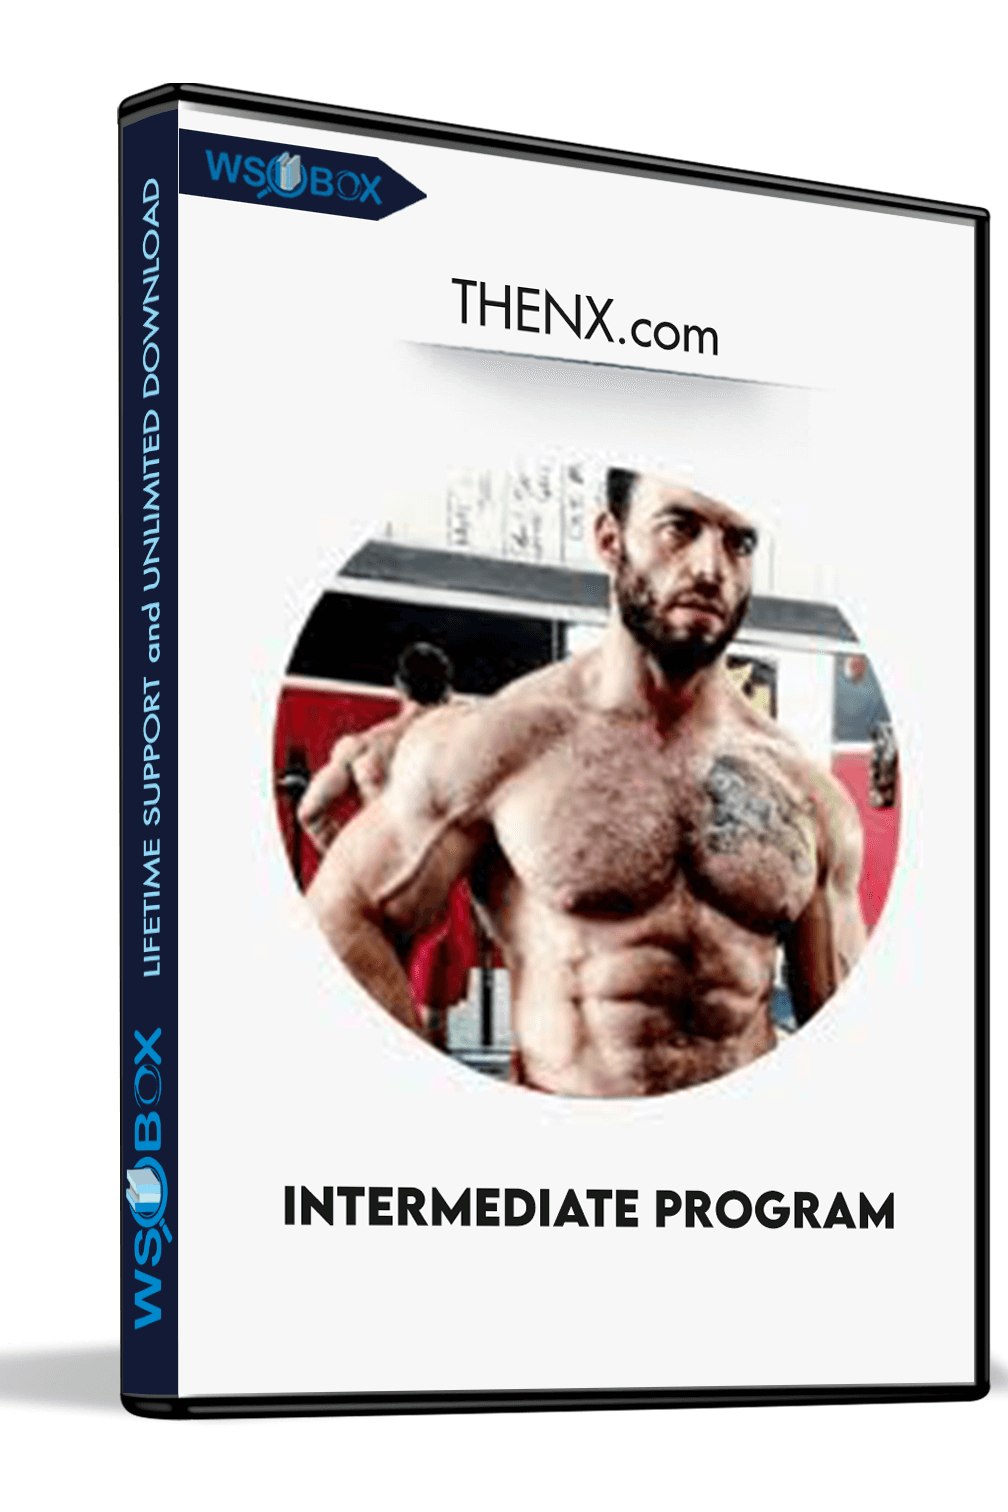 Intermediate Program – THENX.com